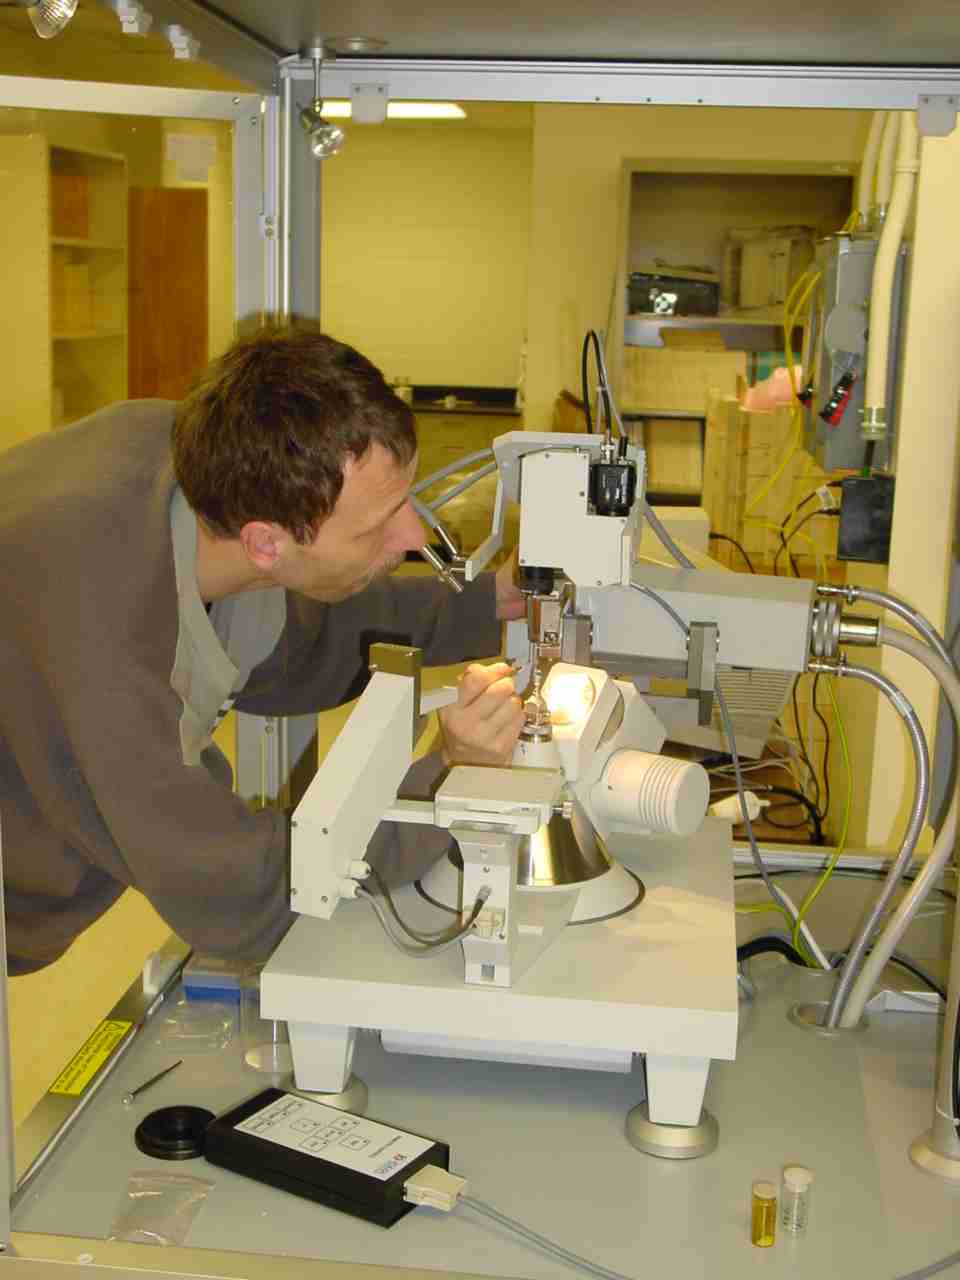 Robert aligning the goniometer